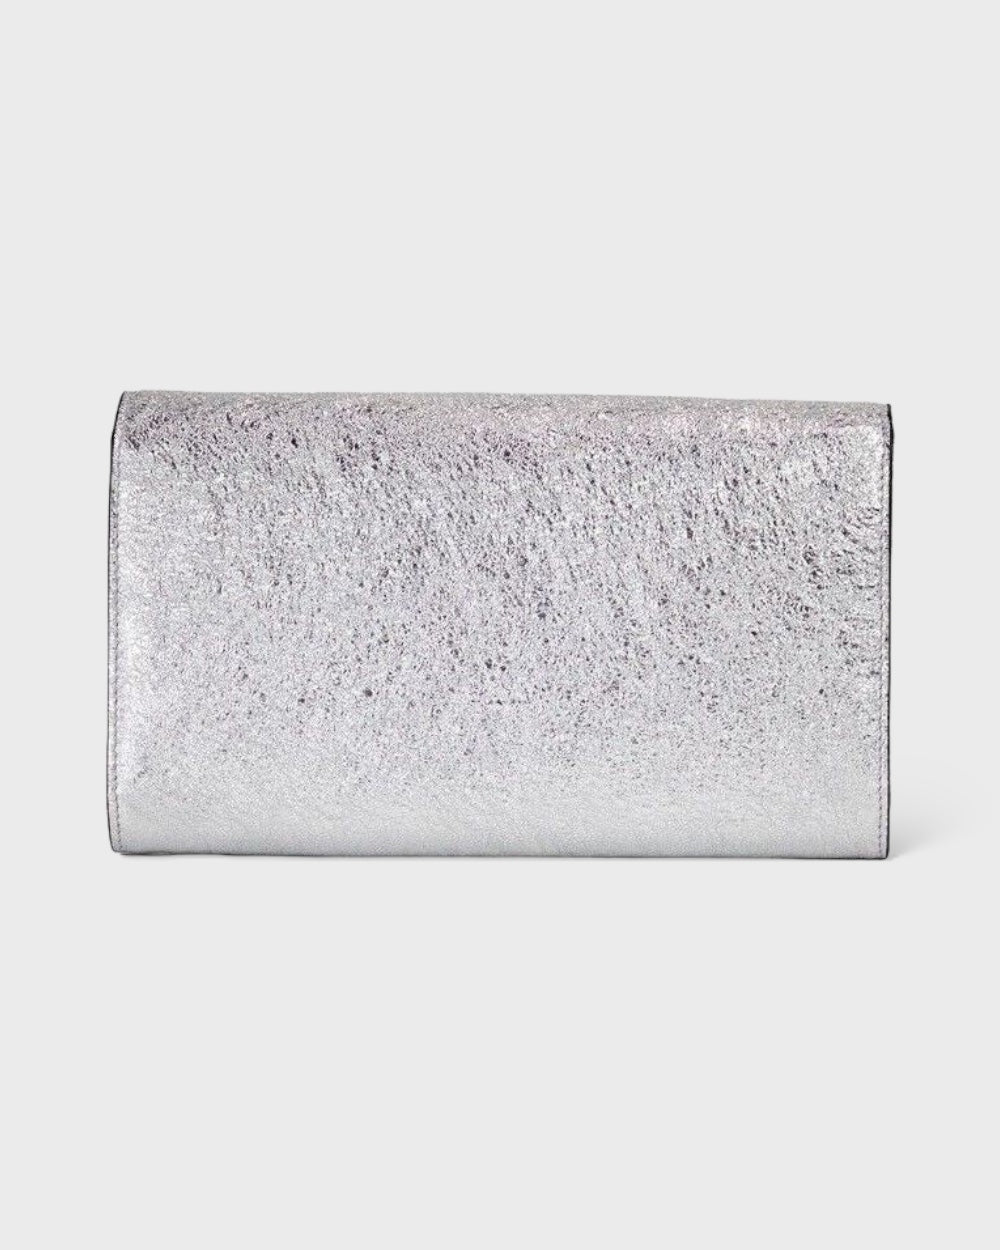 Versace Small Metallic Silver Lamb Leather Medusa Clutch Crossbody Wallet Bag